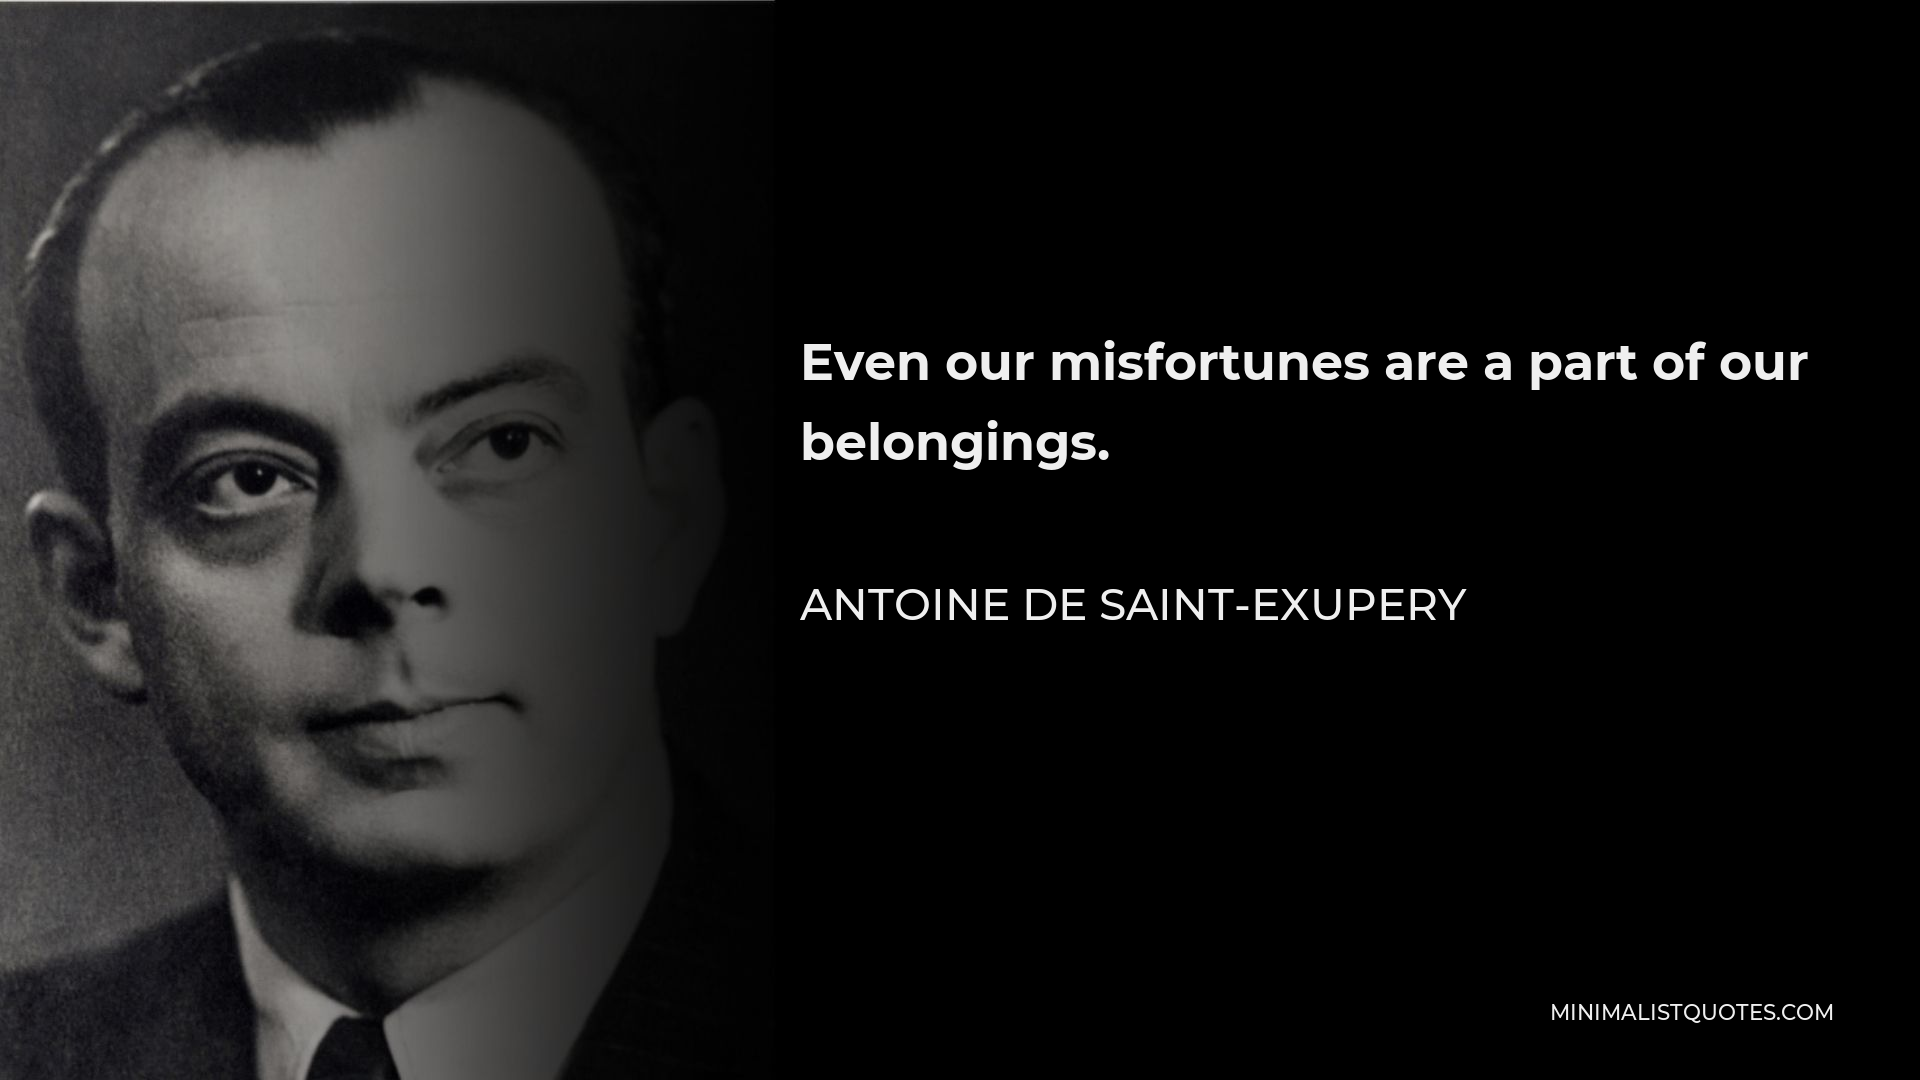 Antoine de Saint-Exupery Quote - Even our misfortunes are a part of our belongings.